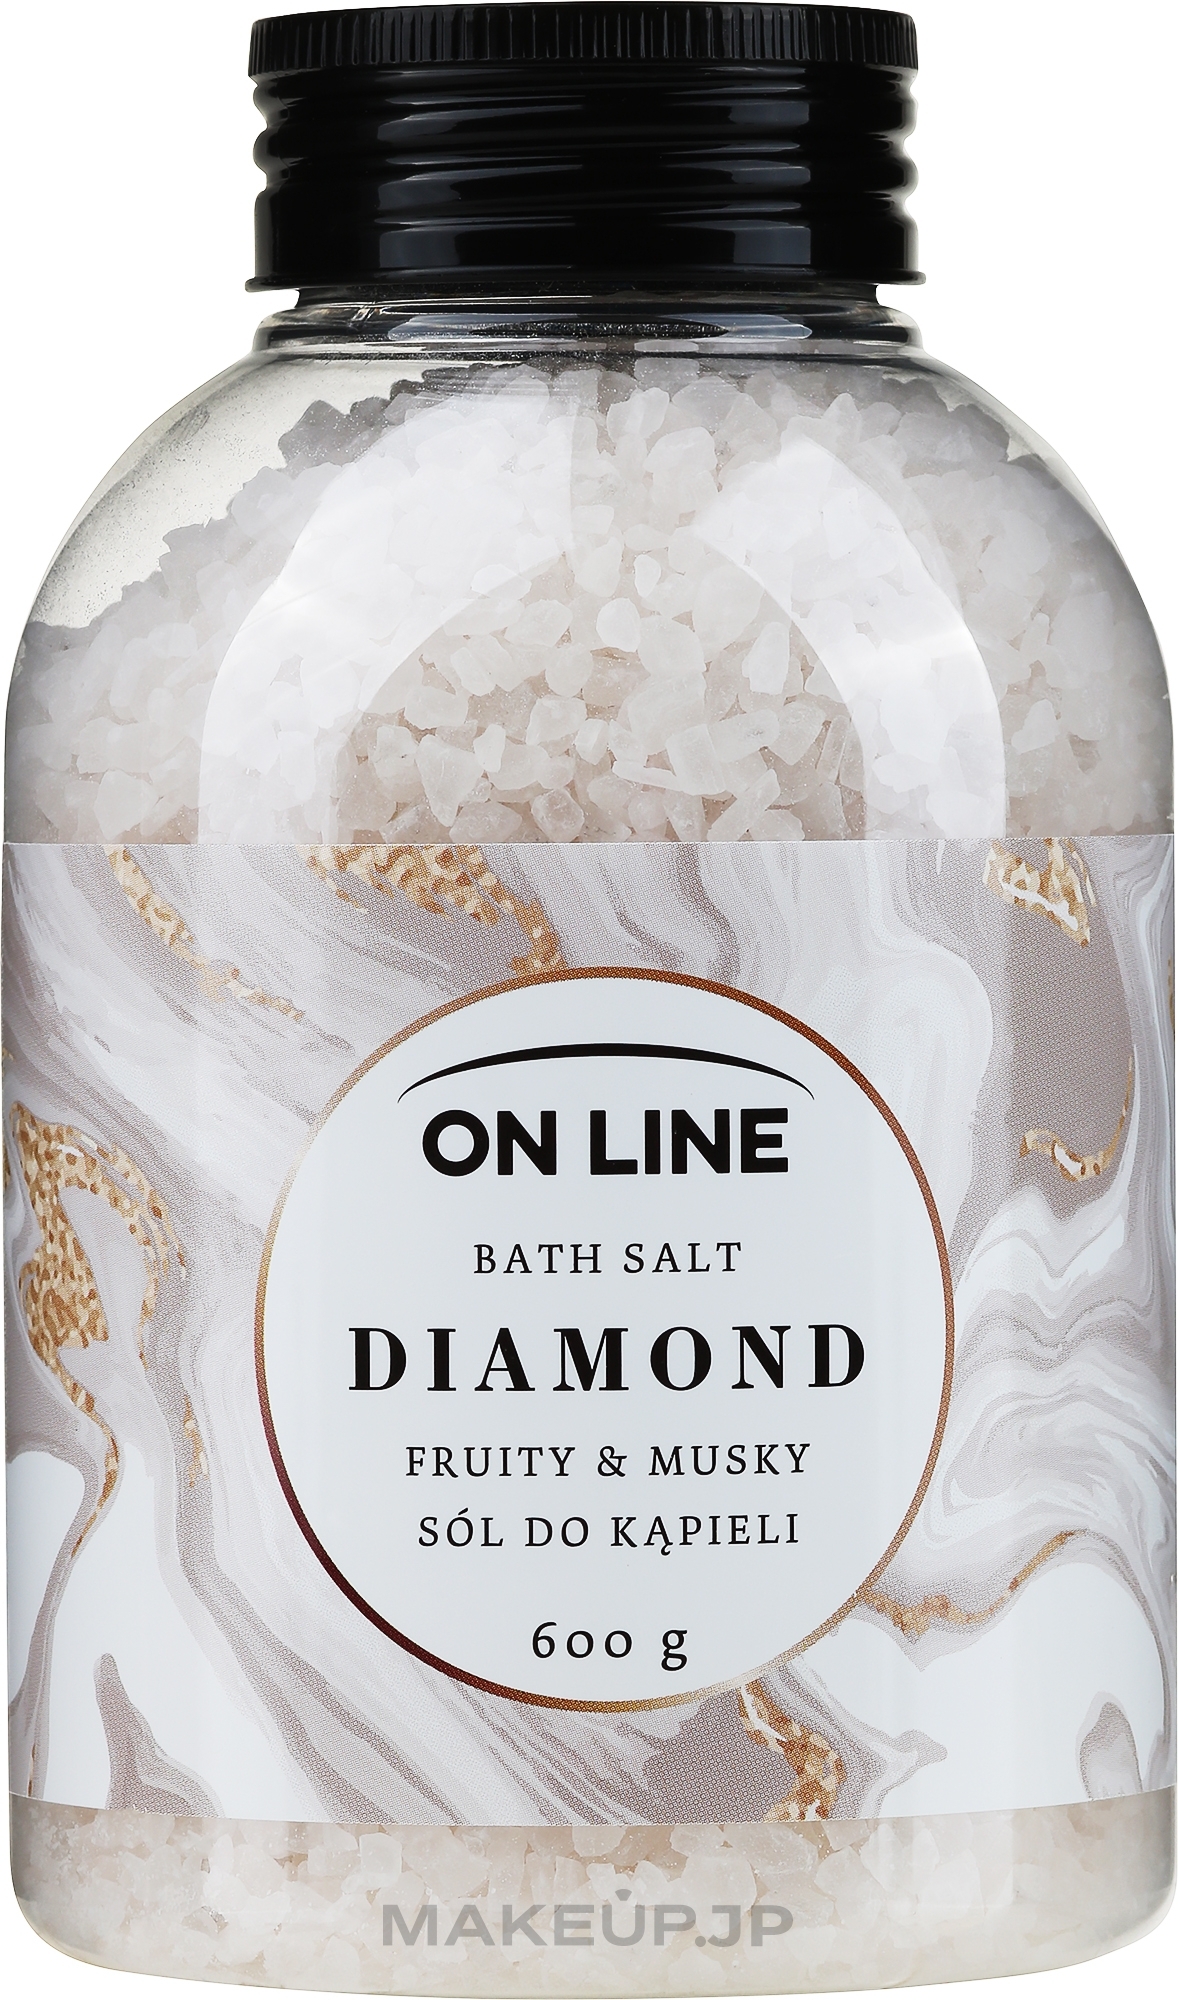 Bath Salt "Diamond" - On Line Diamond Bath Salt — photo 600 g